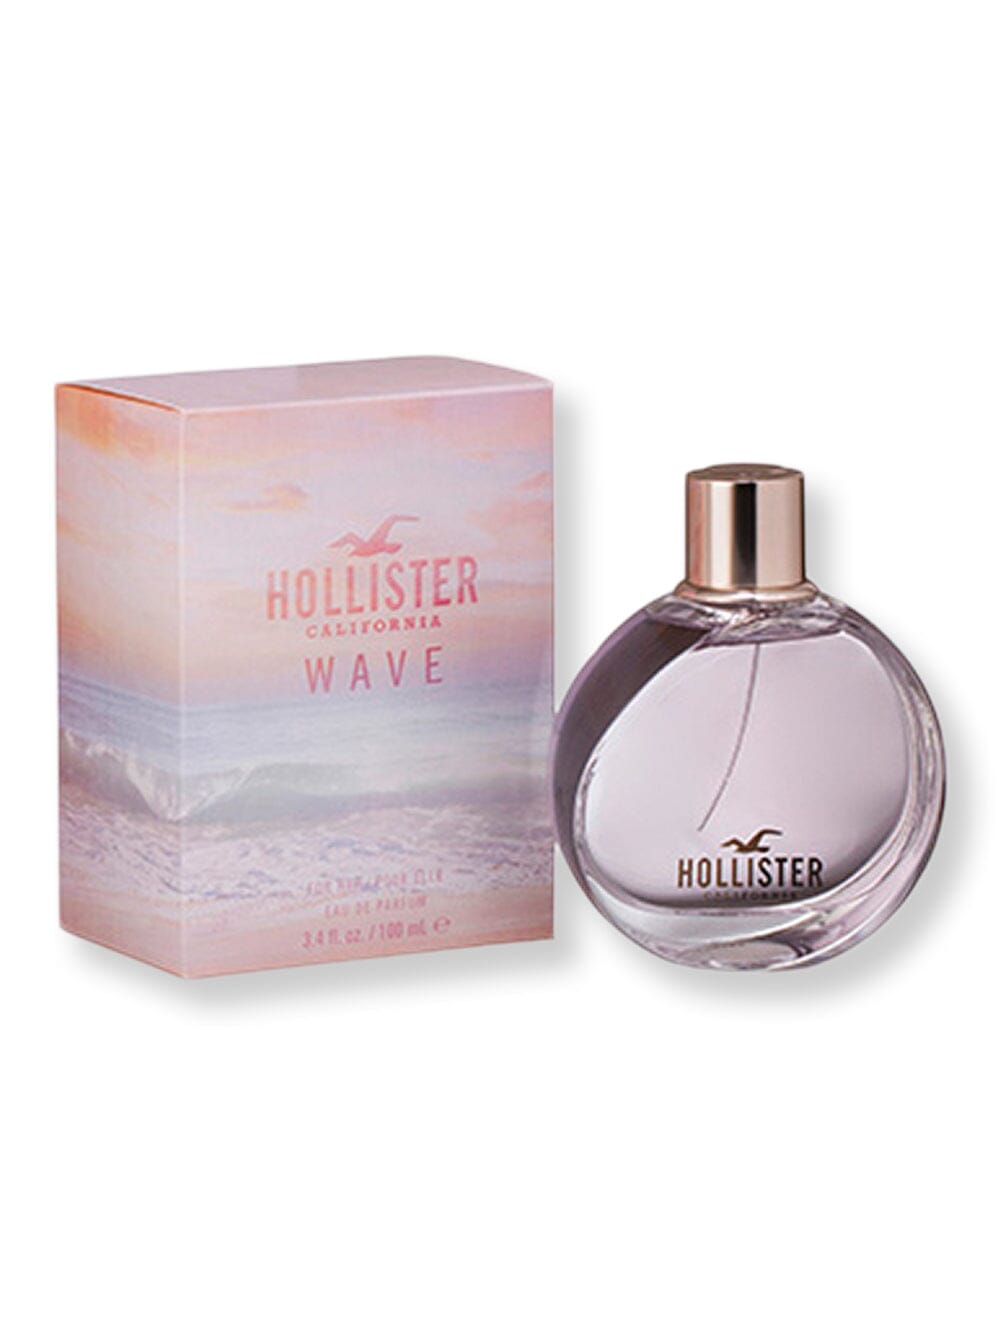 Hollister Hollister Wave For Her EDP Spray 3.4 oz100 ml Perfume 